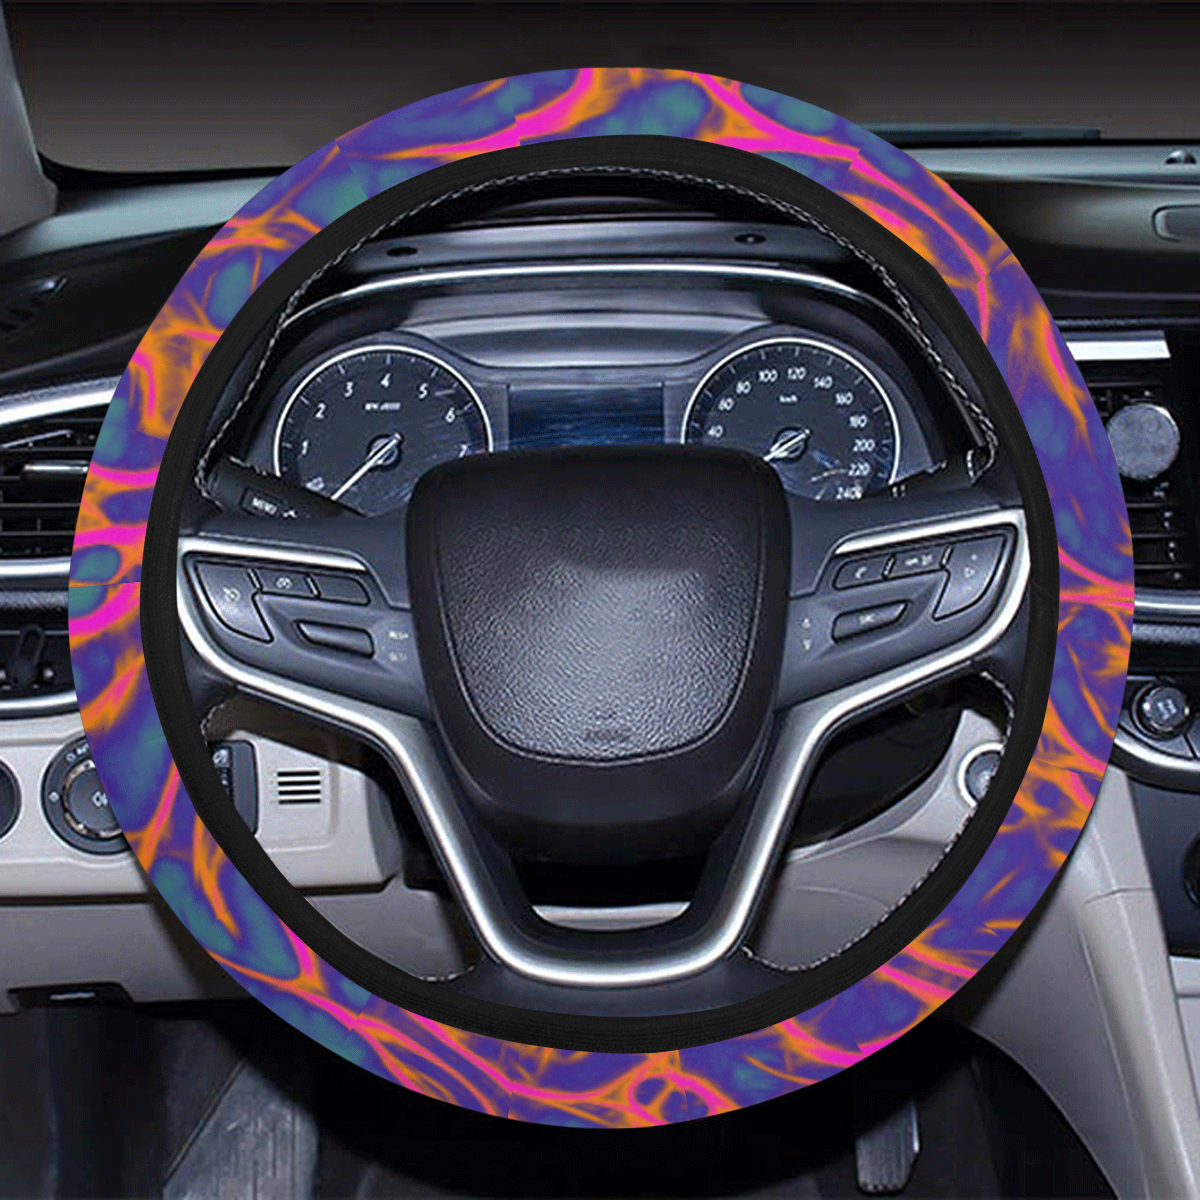 Fractal Batik ART - Hippie Orange Branches Steering Wheel Cover with Elastic Edge